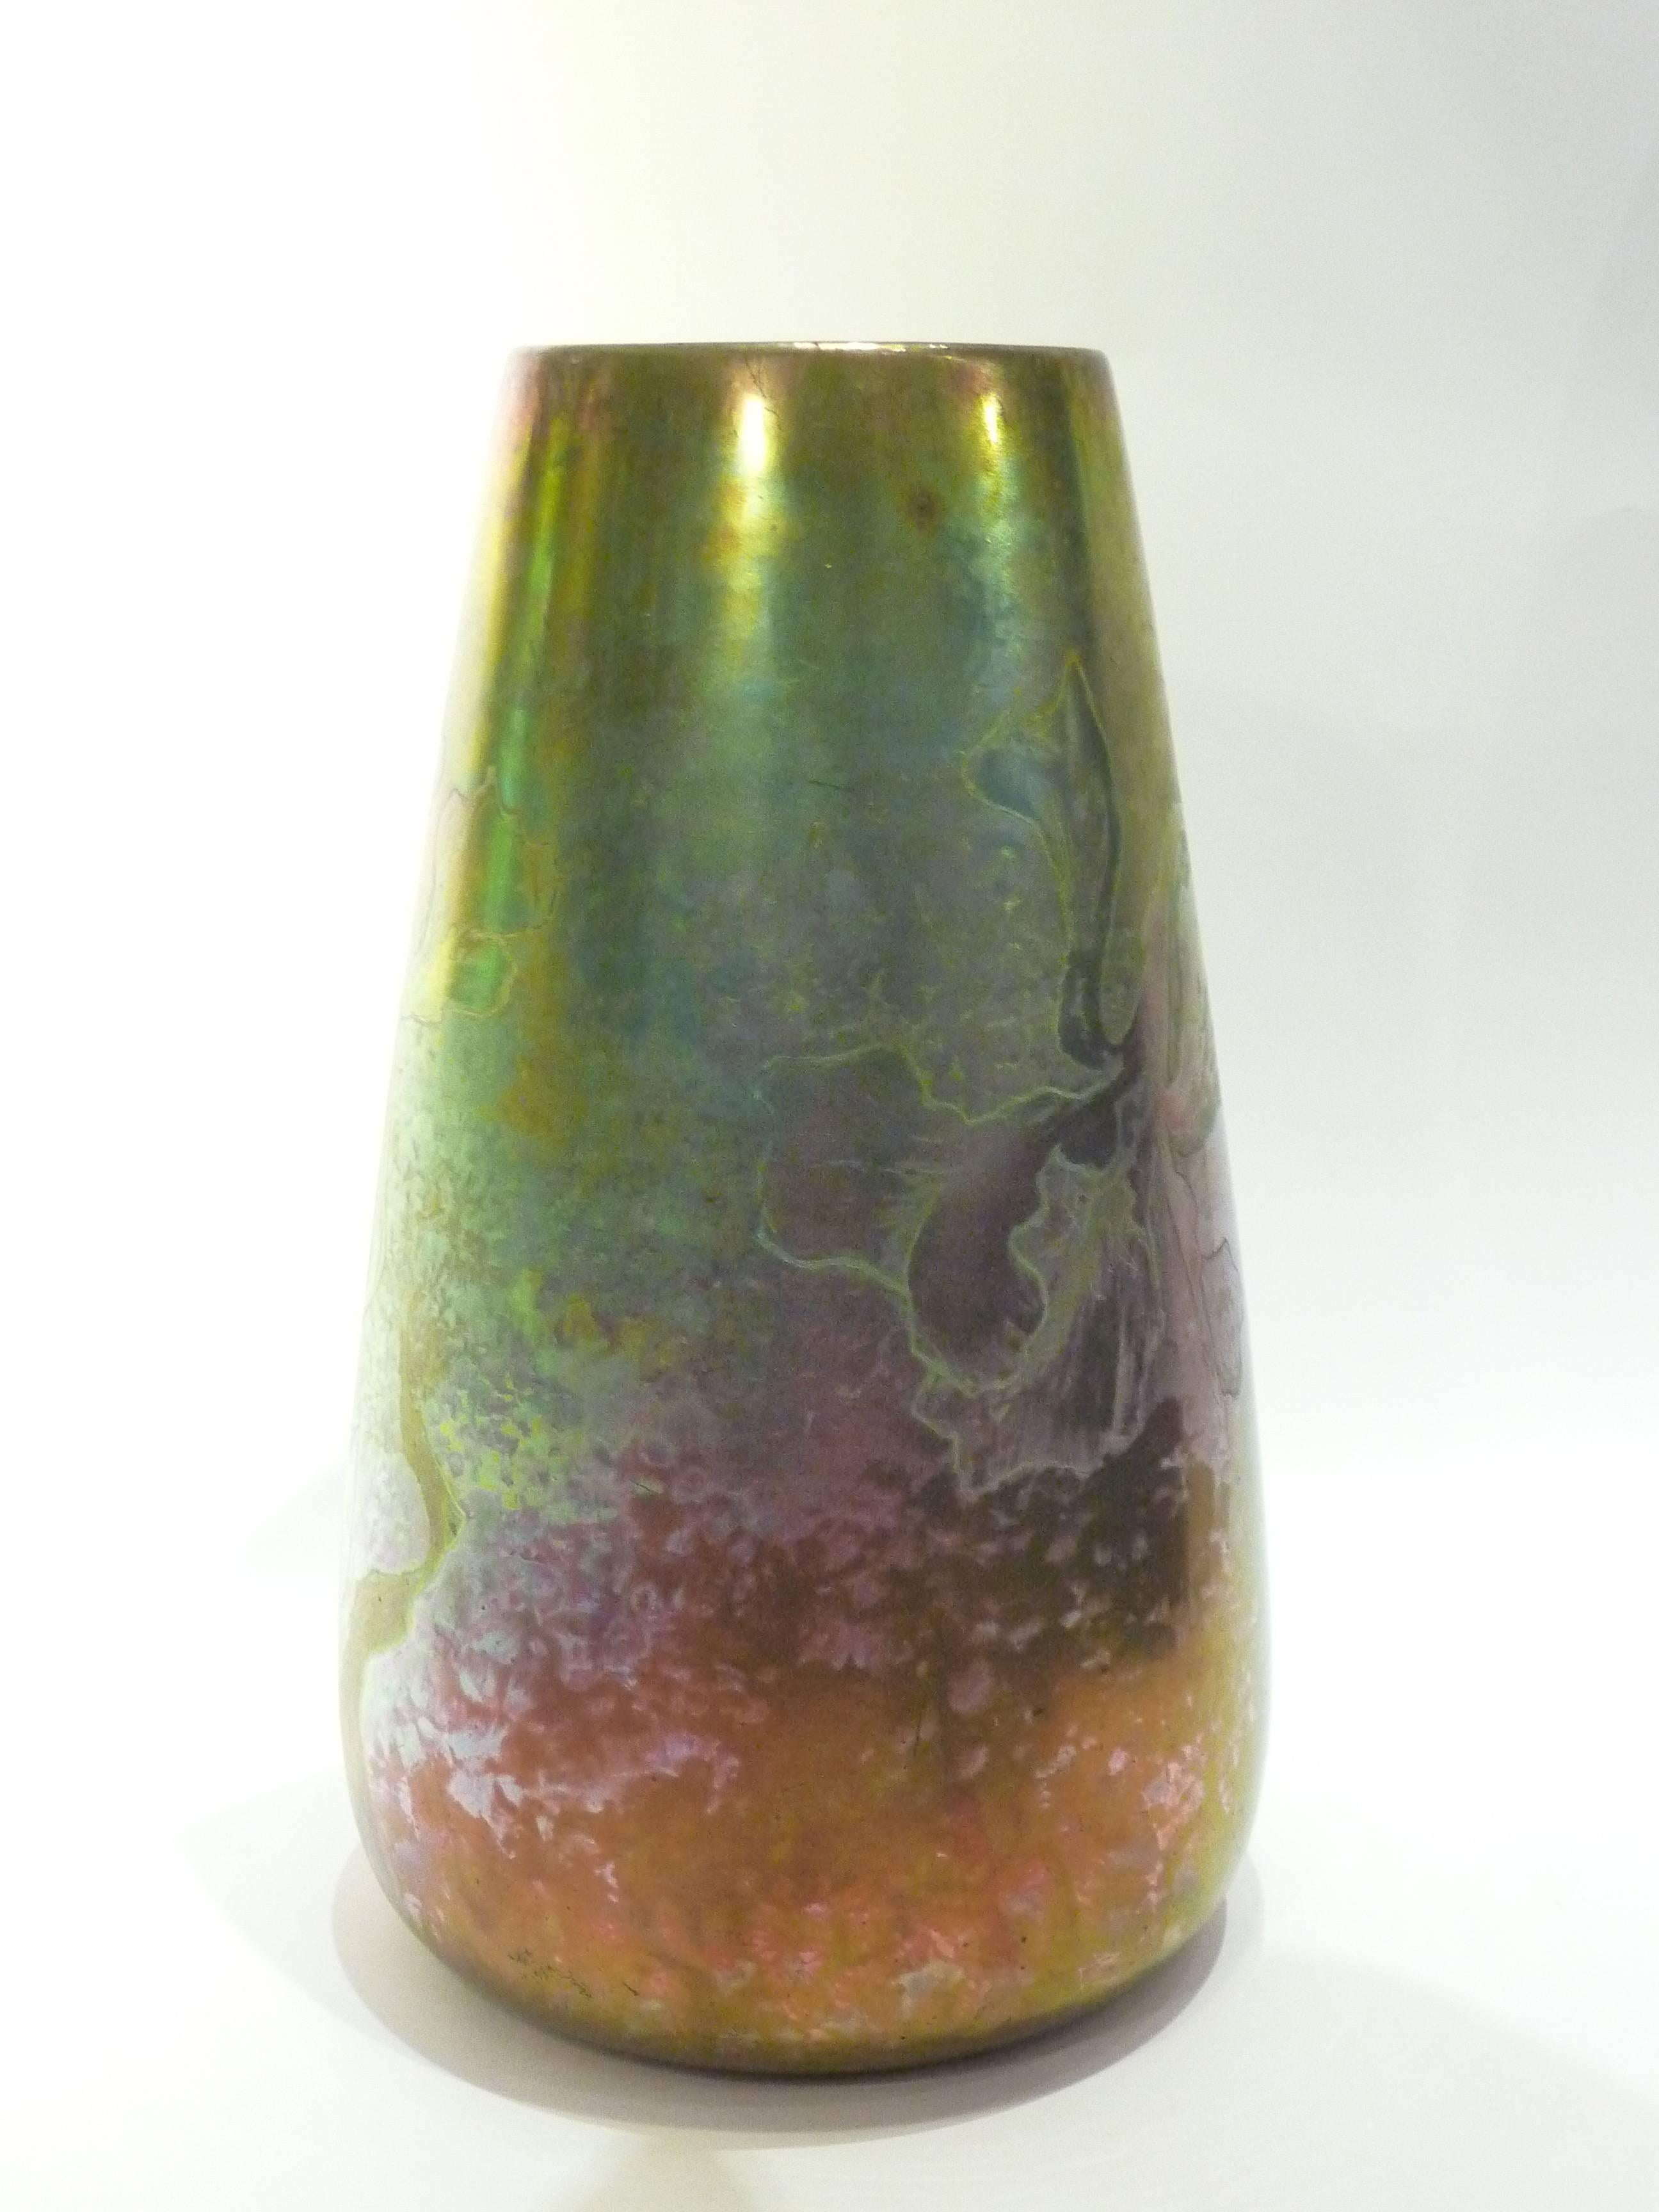 Clément Massier.
An Art Nouveau earthenware vase decorated with a metallic iridescent glaze of irises.
Signed underneath: Clément Massier / Golfe-Juan / A.M.

